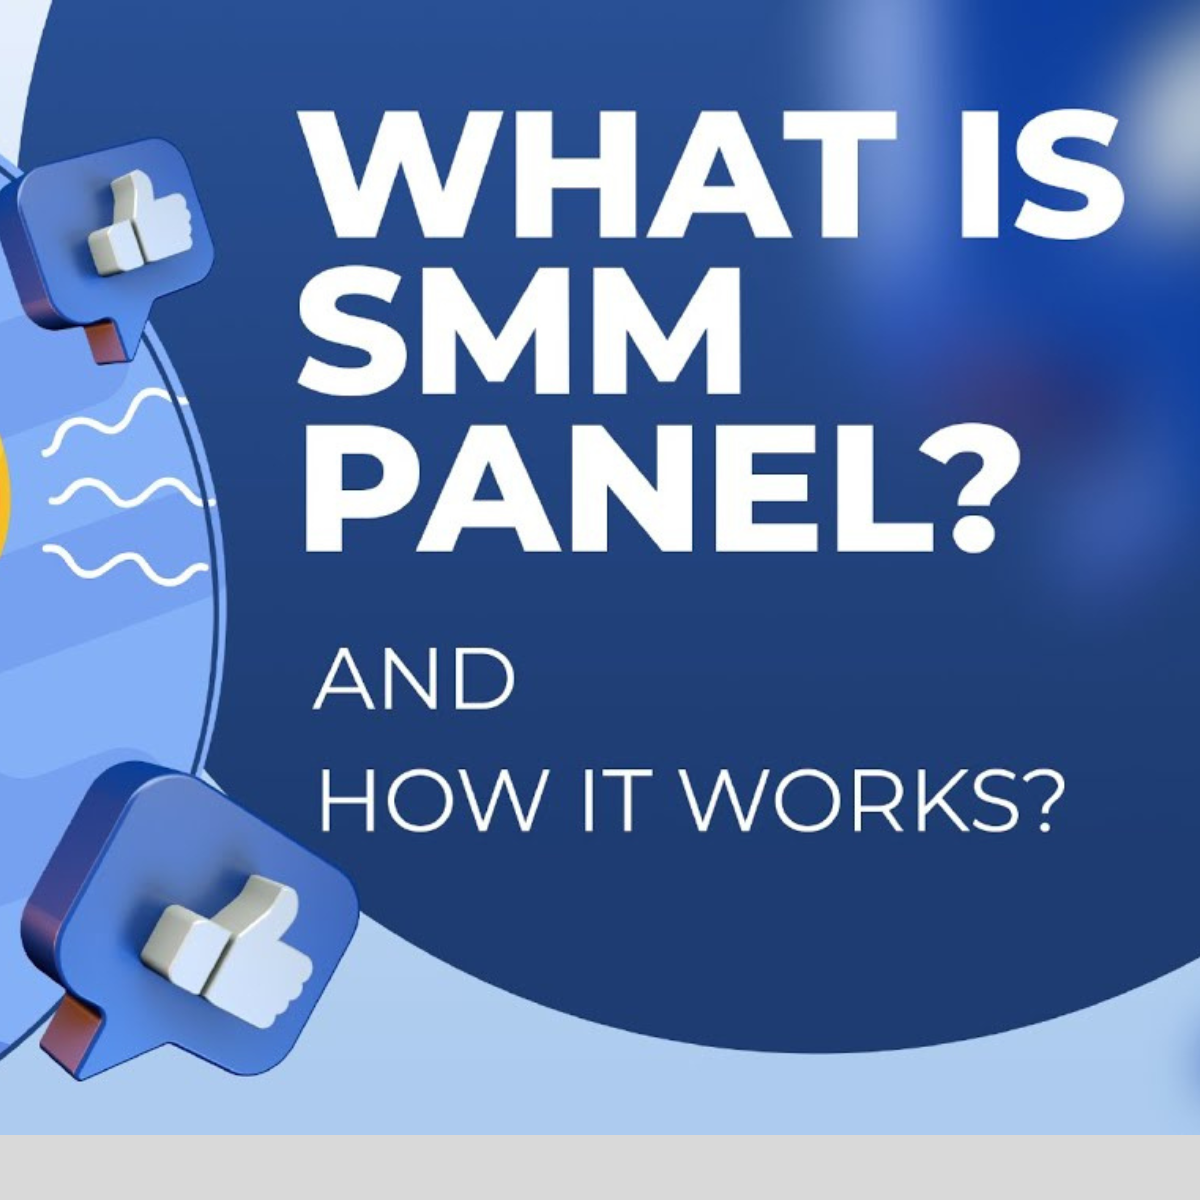 SMM Panels